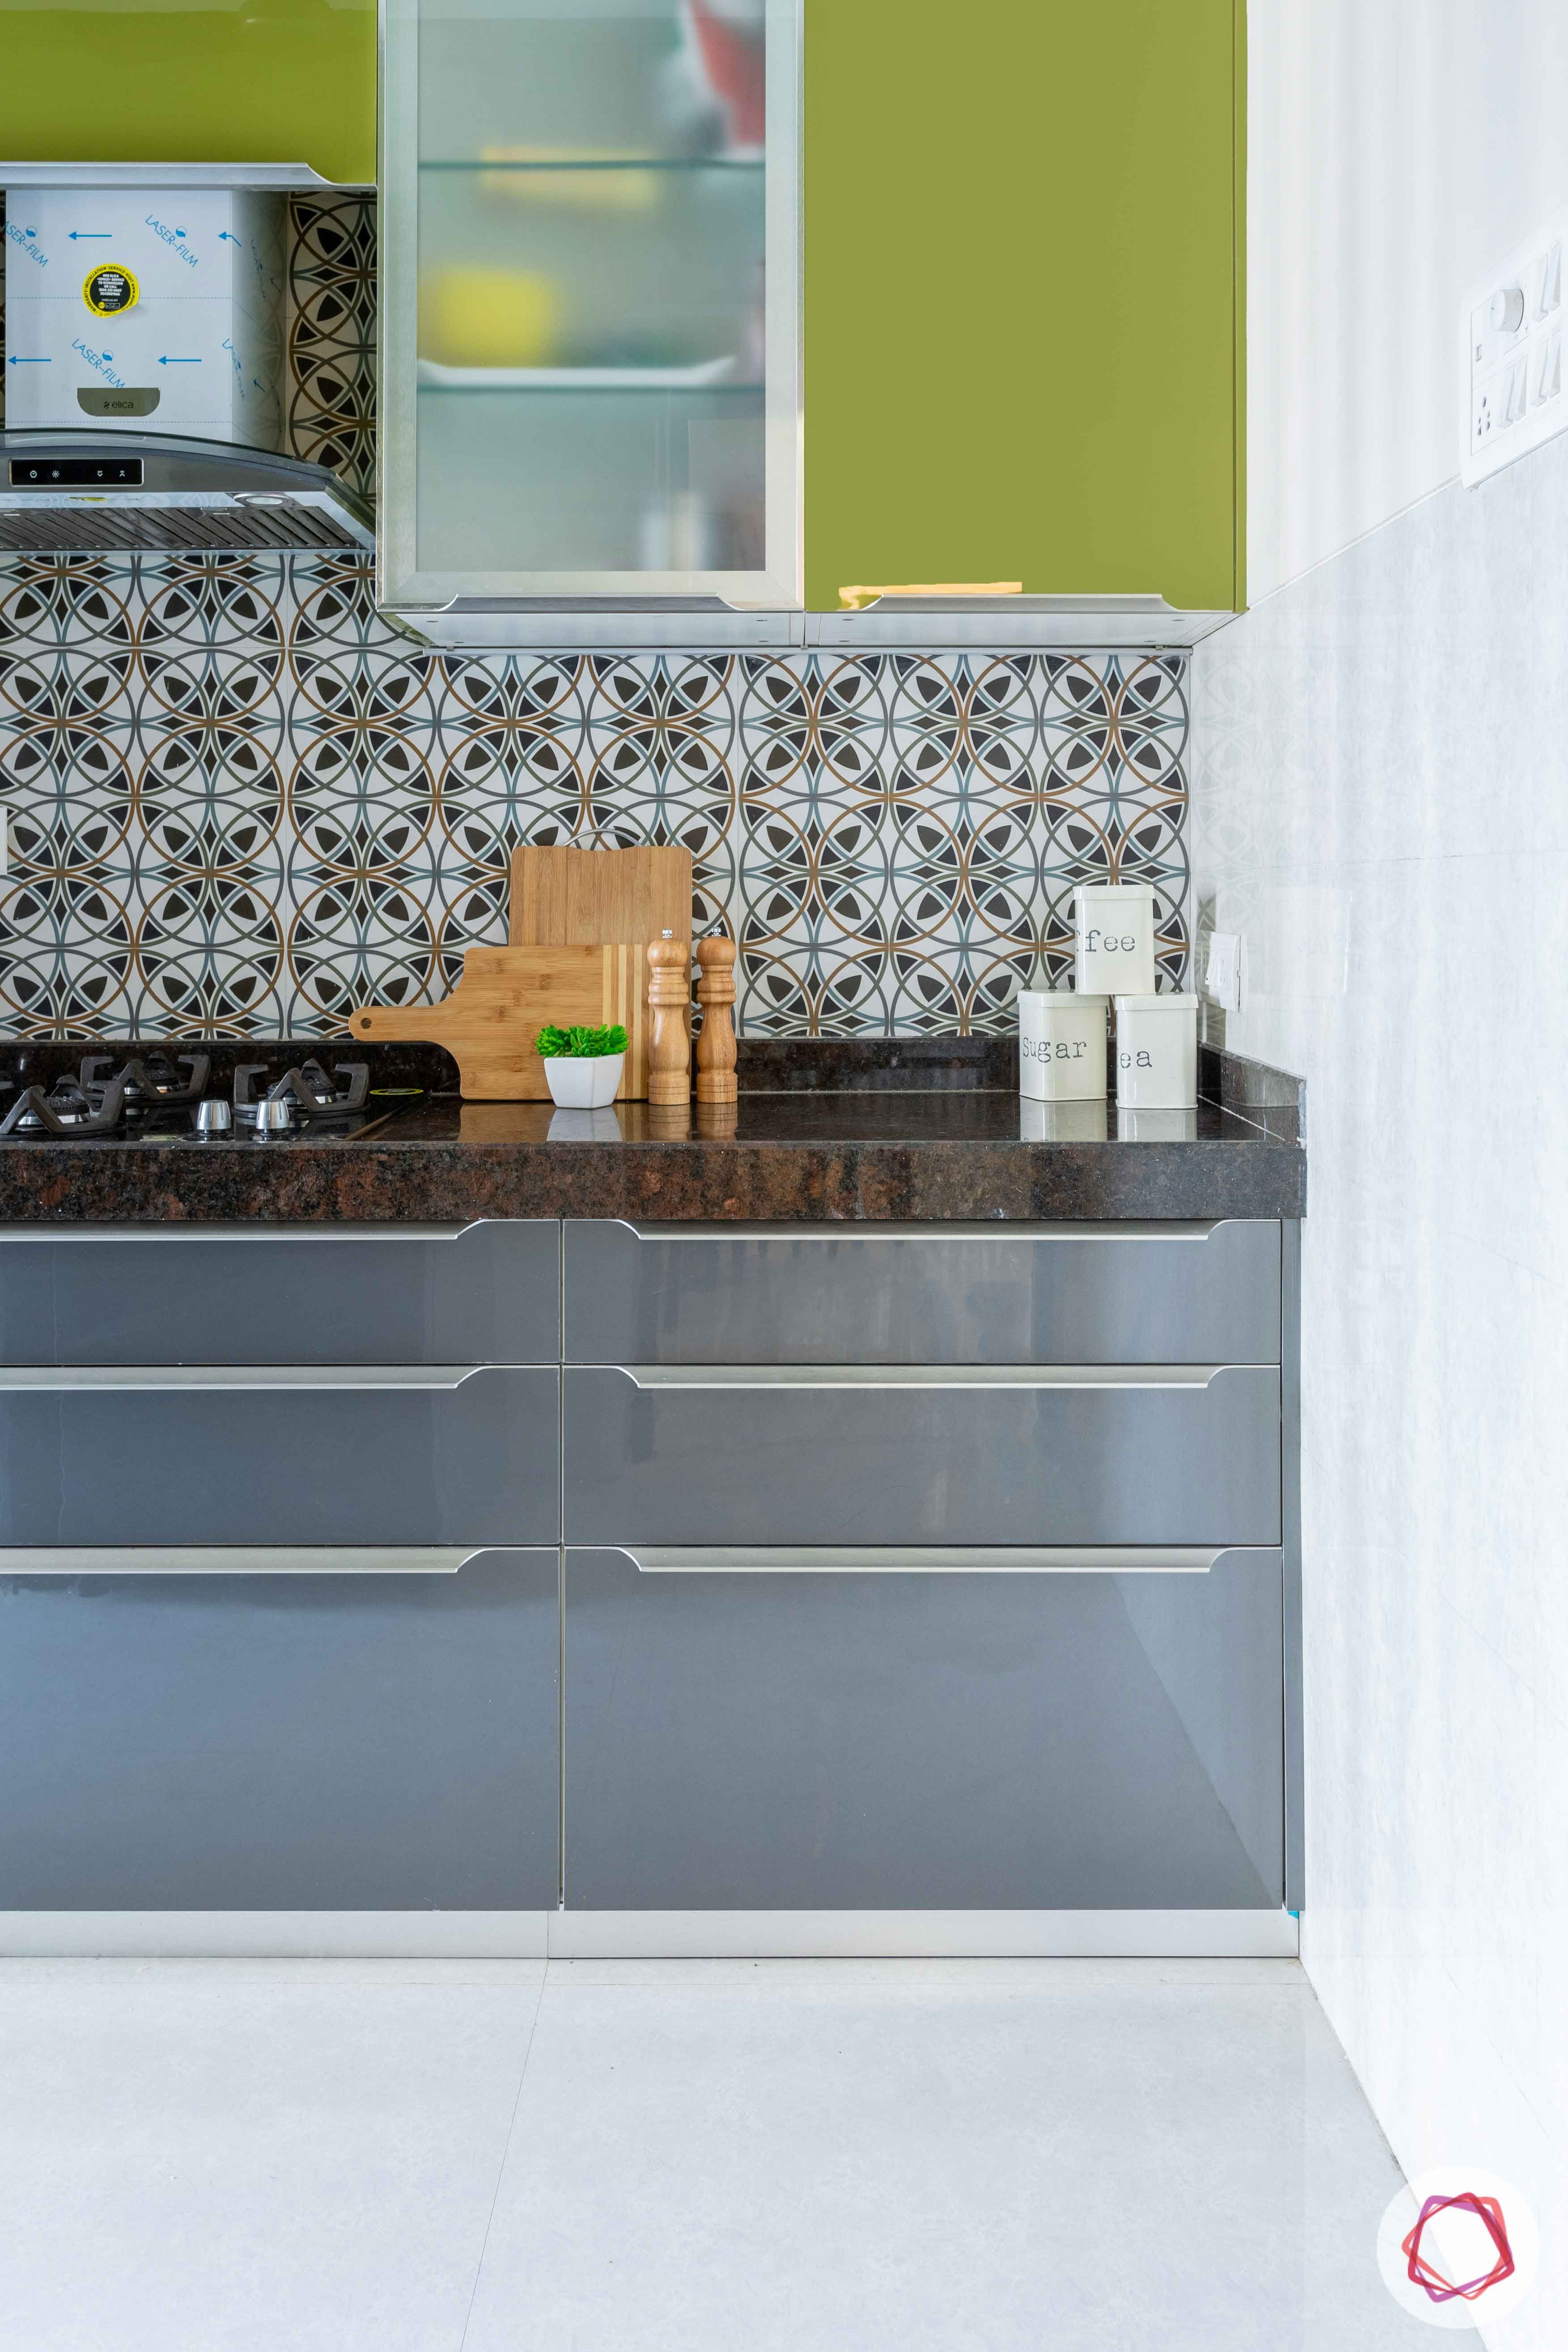 2 bhk flat interior-kitchen-green cabinets-glossy acrylic finish-grey base units-moroccan tiles